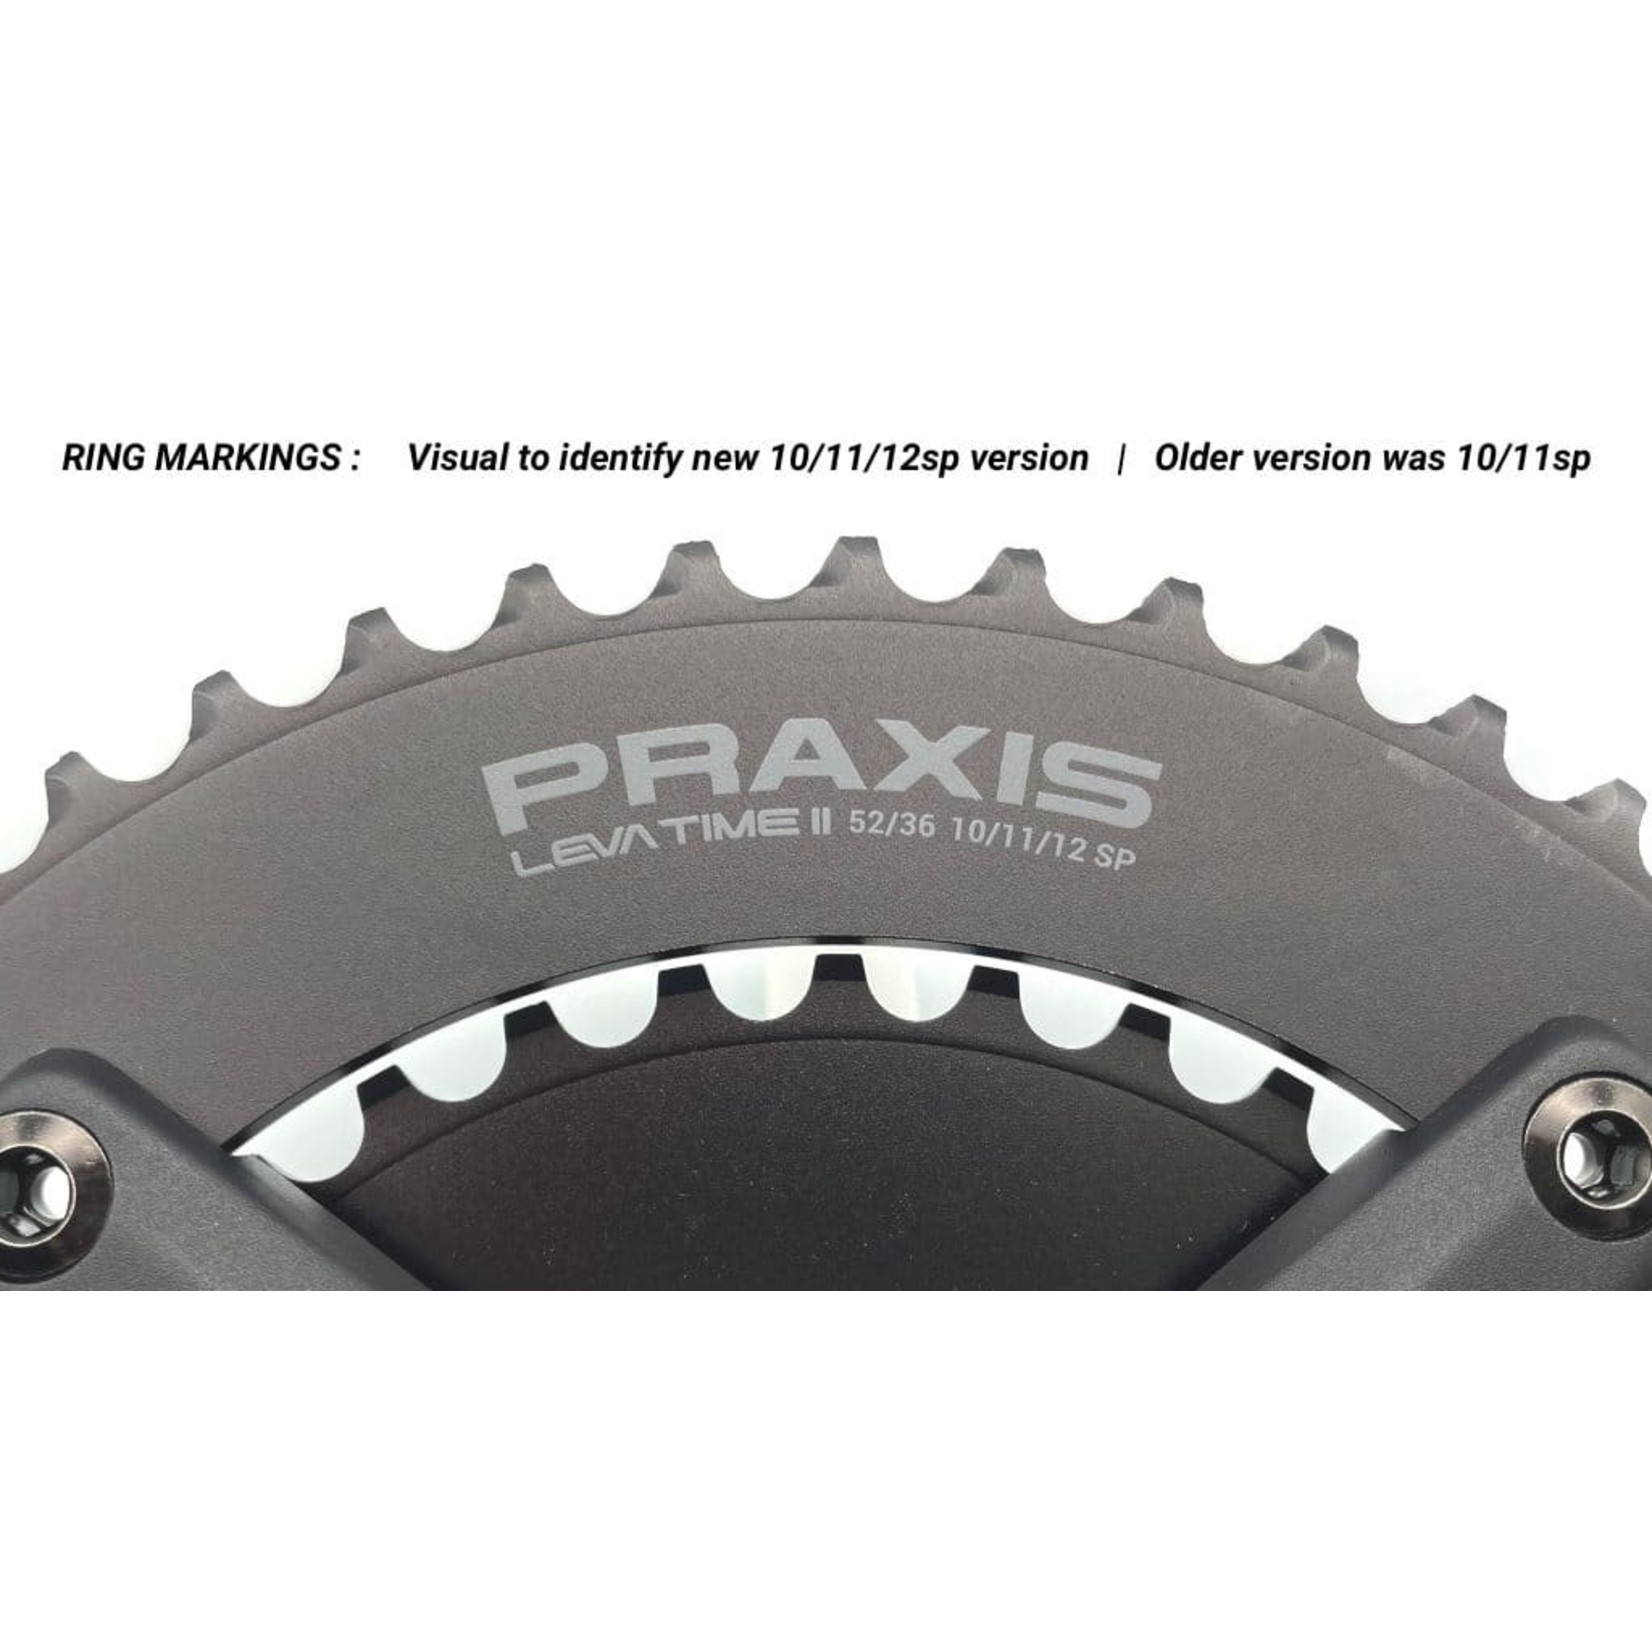 Praxis Praxis Road cranks - Zayante - Carbon-S,172.5mm 52/36